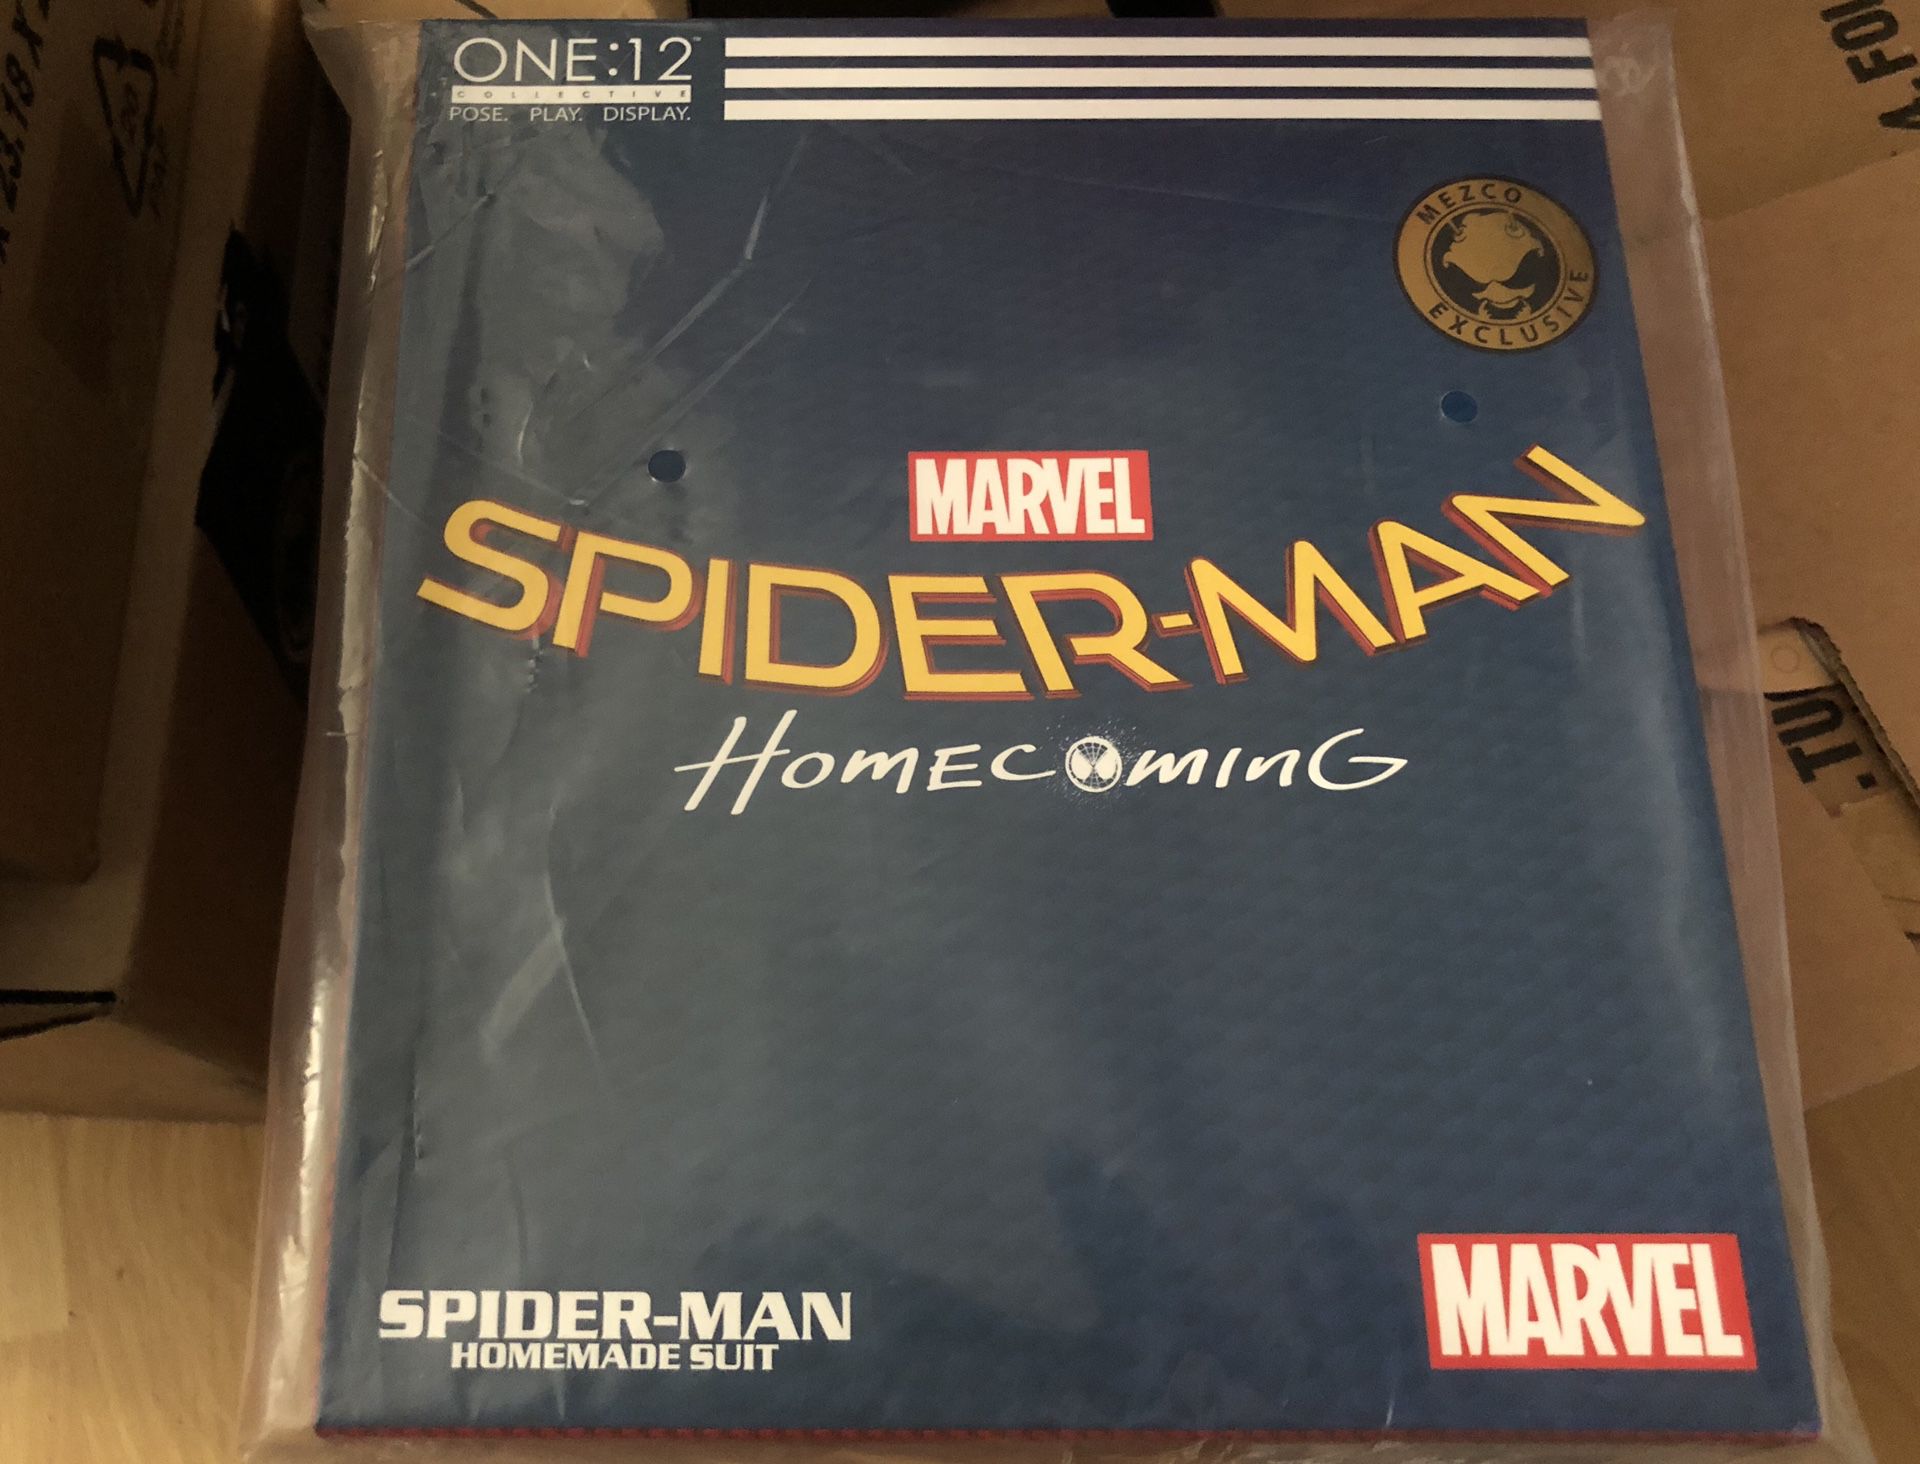 Mezco Homemade suit Spiderman